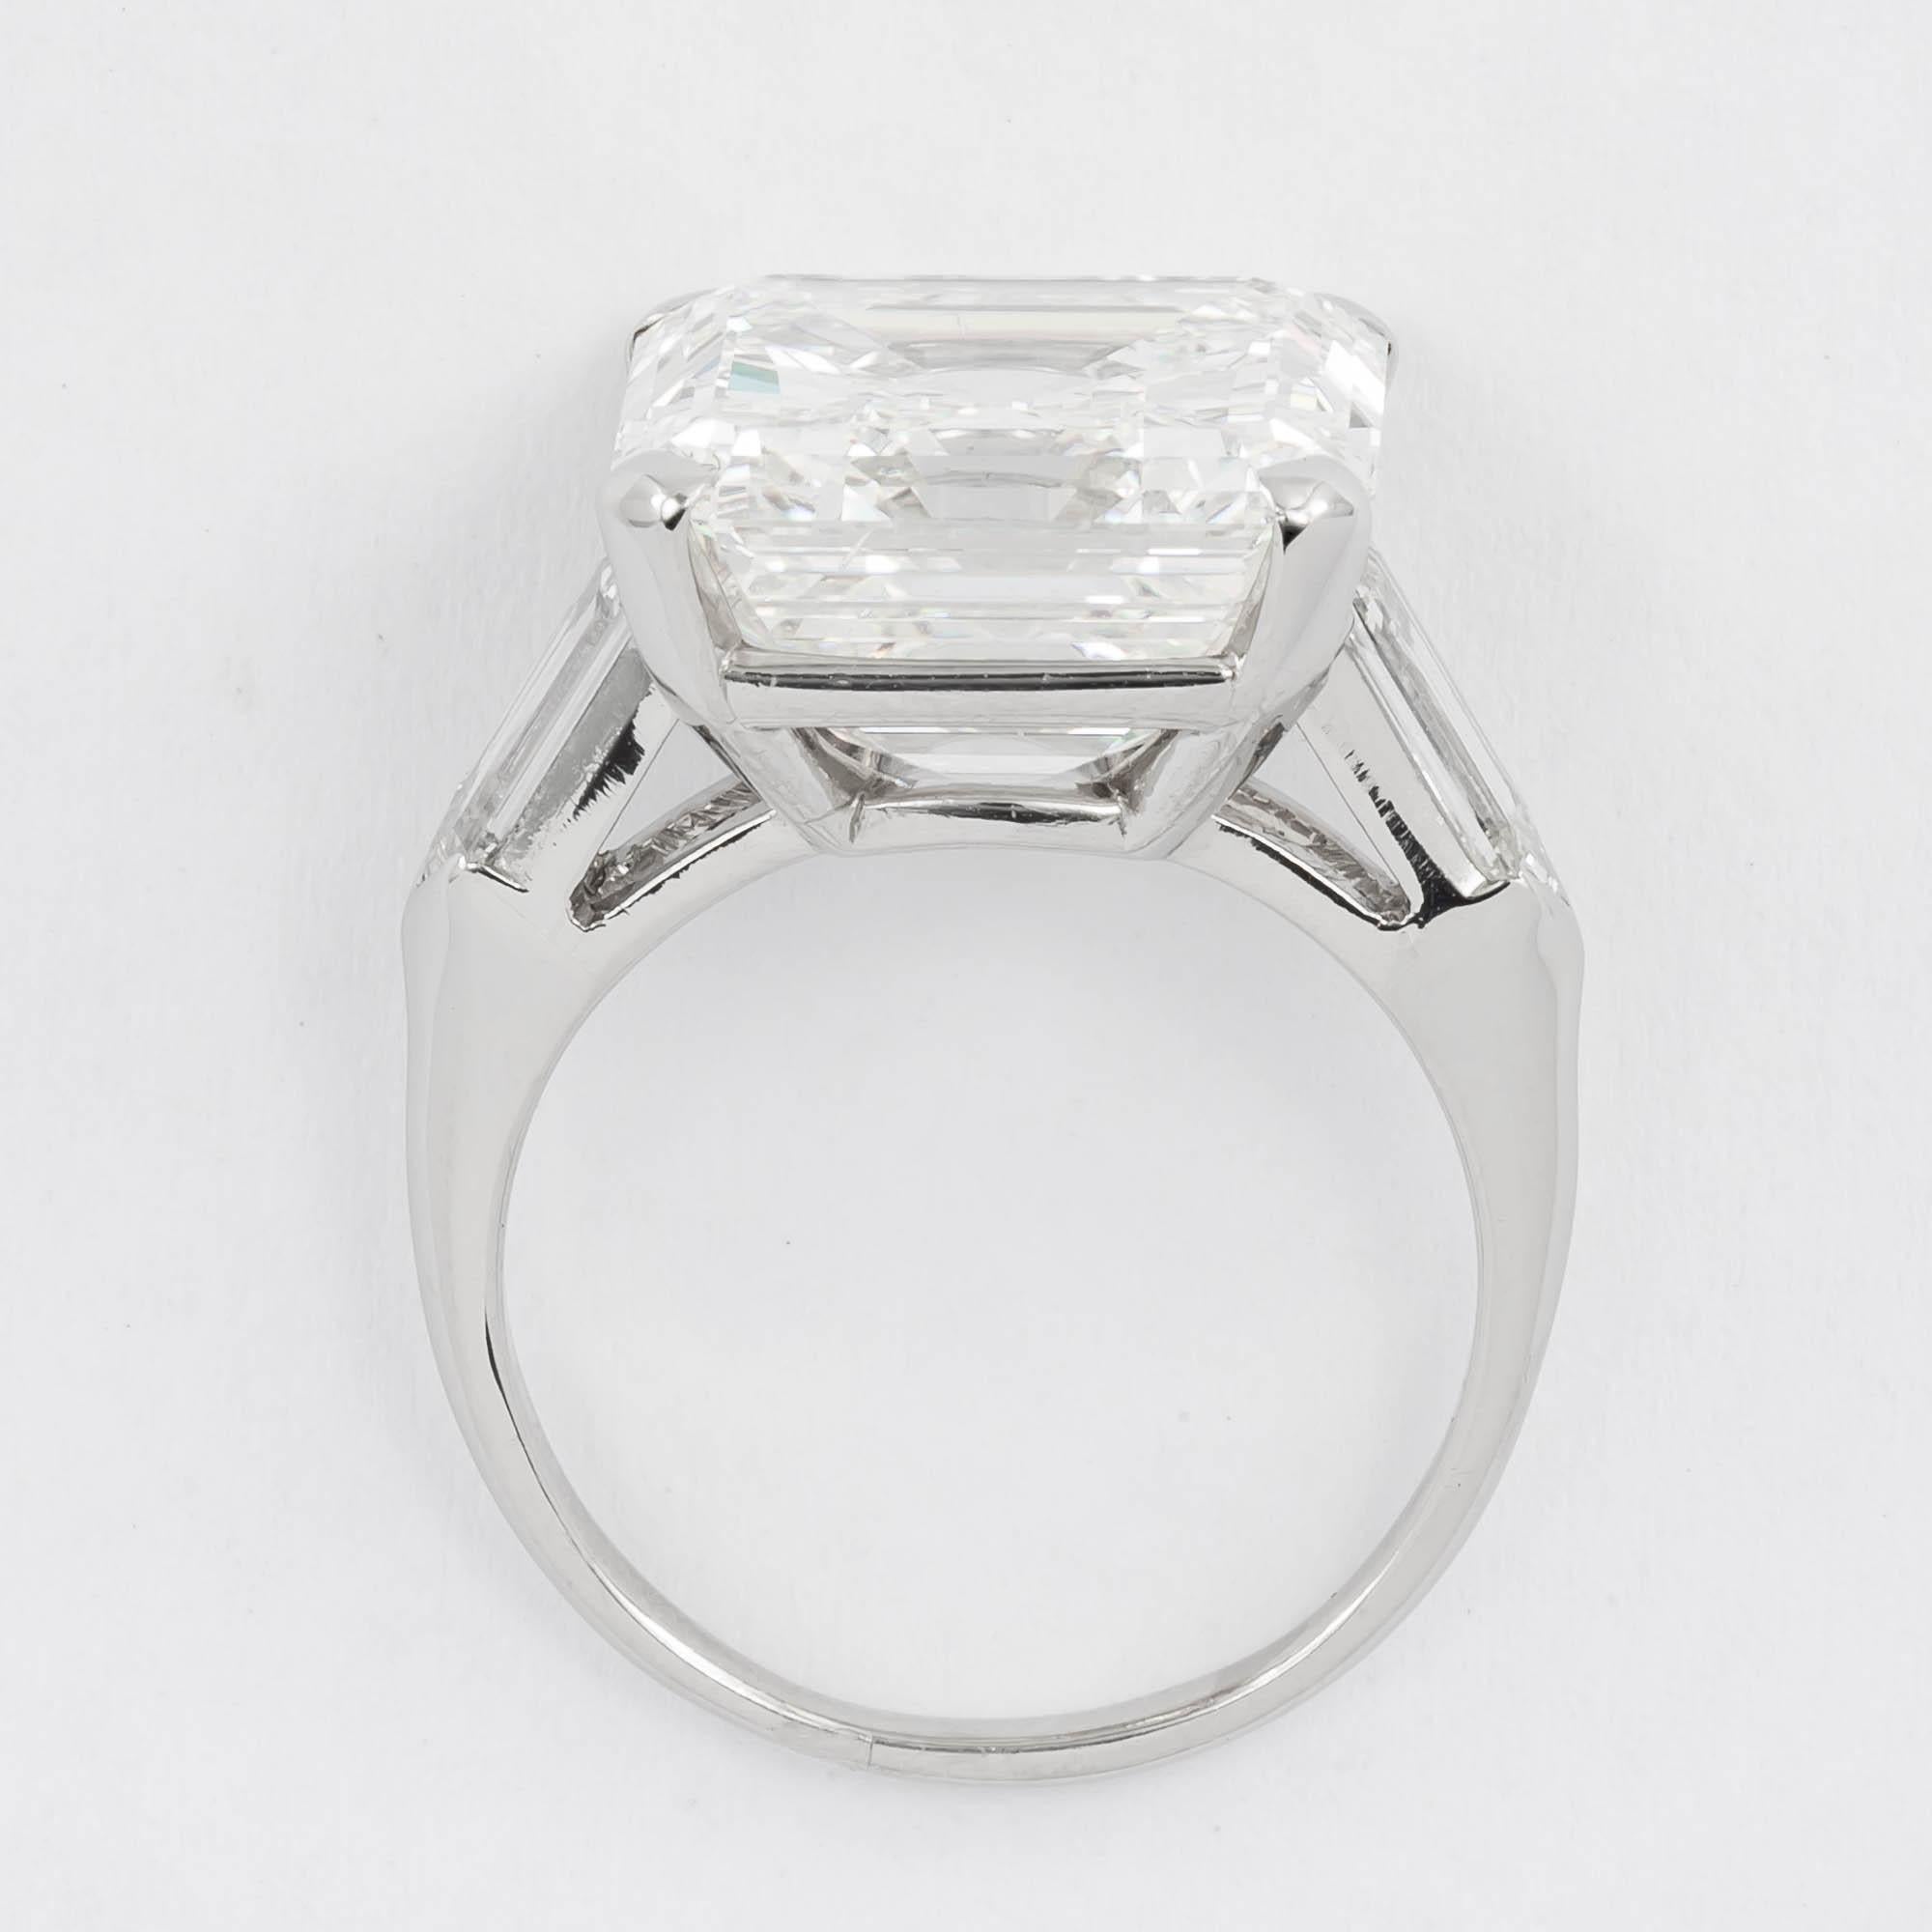 Emerald Cut 13.07 Carat GIA Square Cut Emerald Diamond Ring For Sale